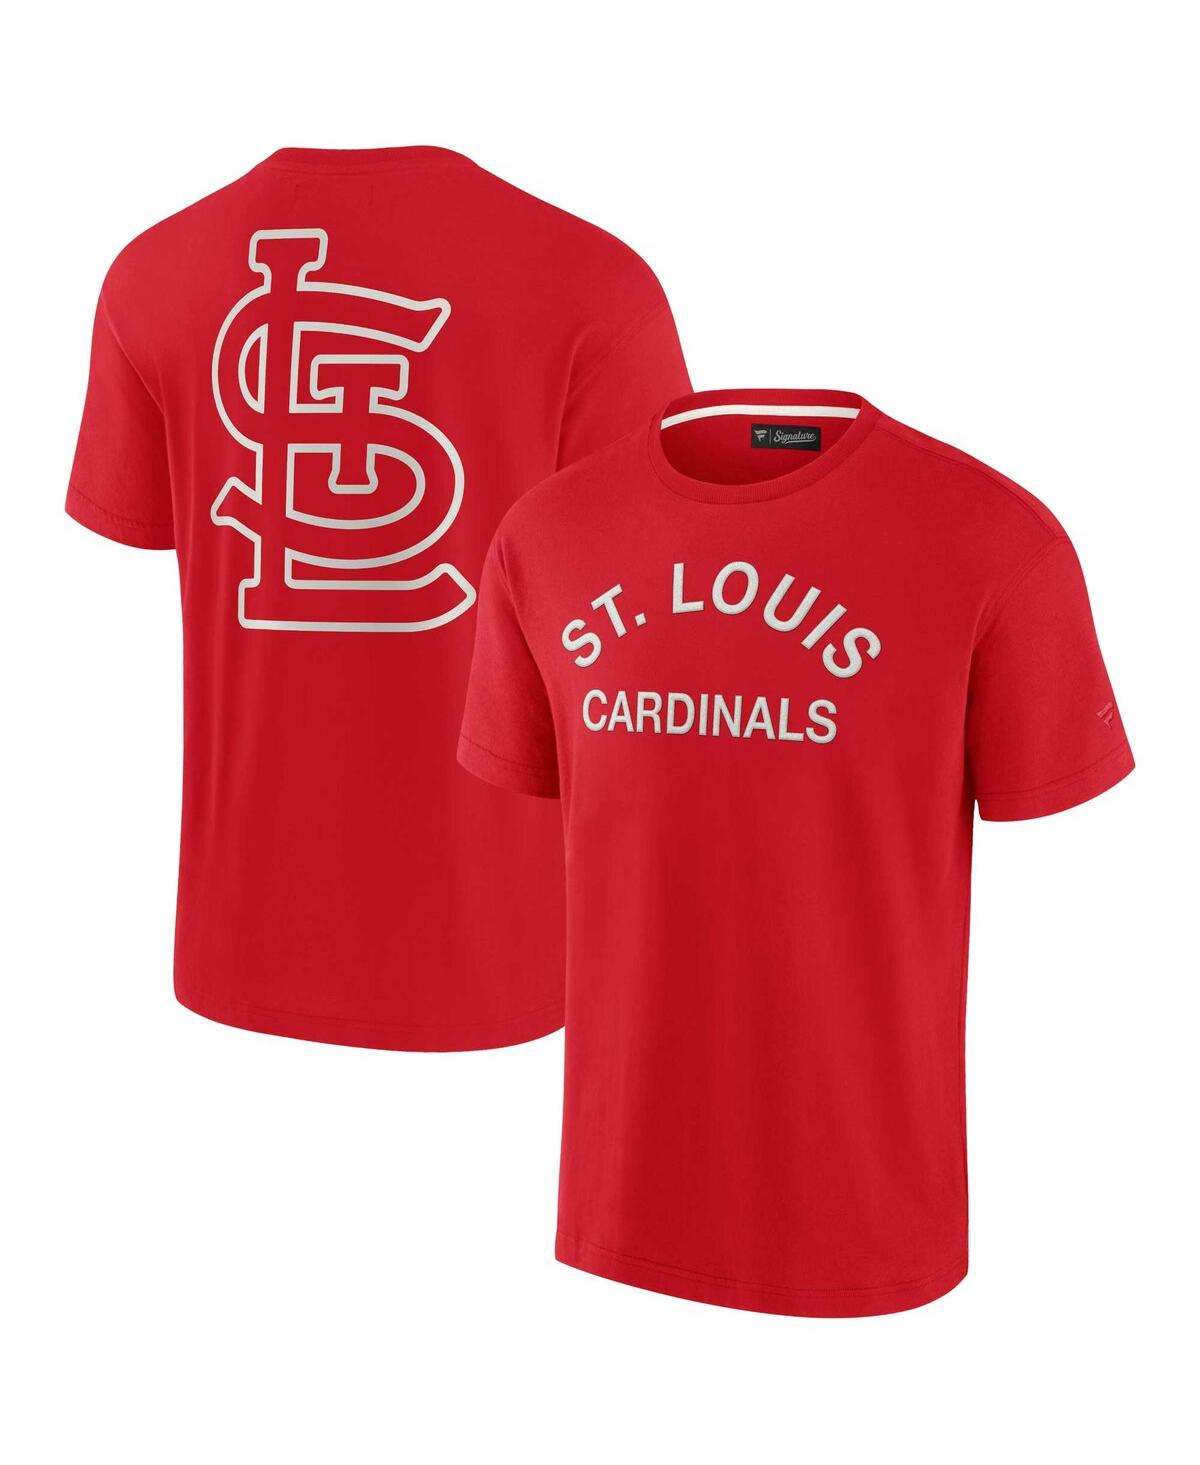 Men's and Women's Fanatics Signature Red St. Louis Cardinals Super Soft Short Sleeve T-shirt - Red